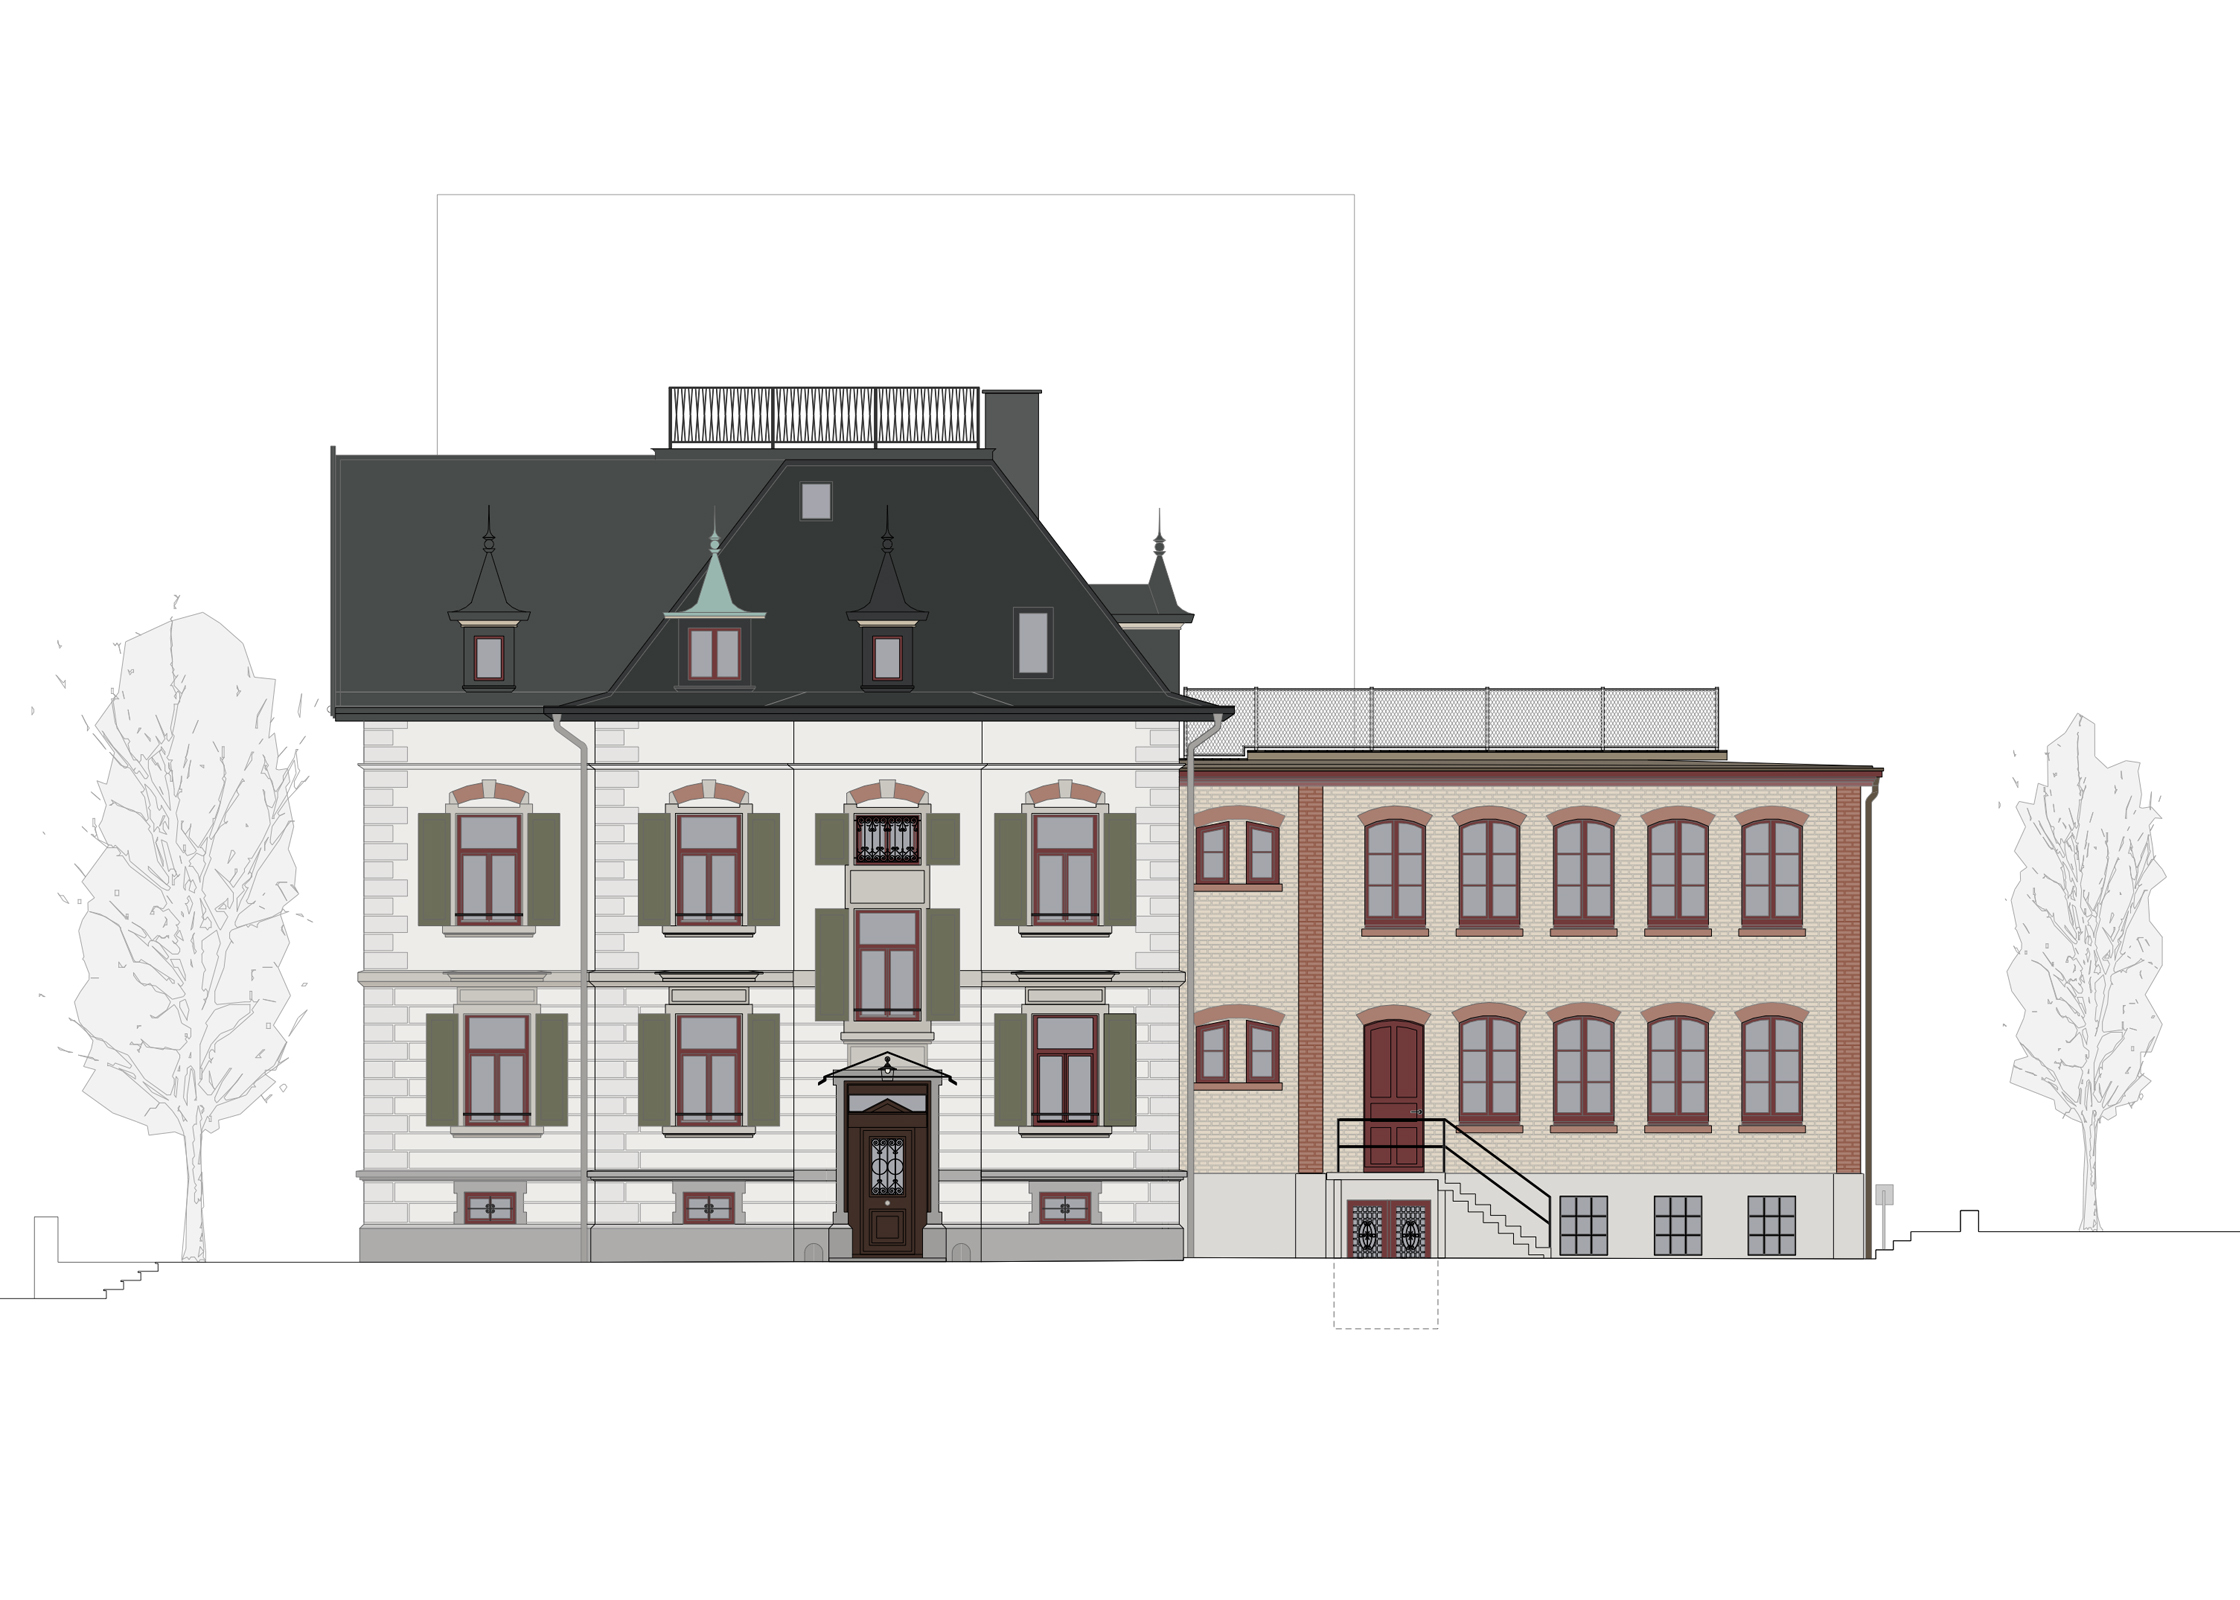 Villa Staub, Zug, Eggenspieler Architekten AG